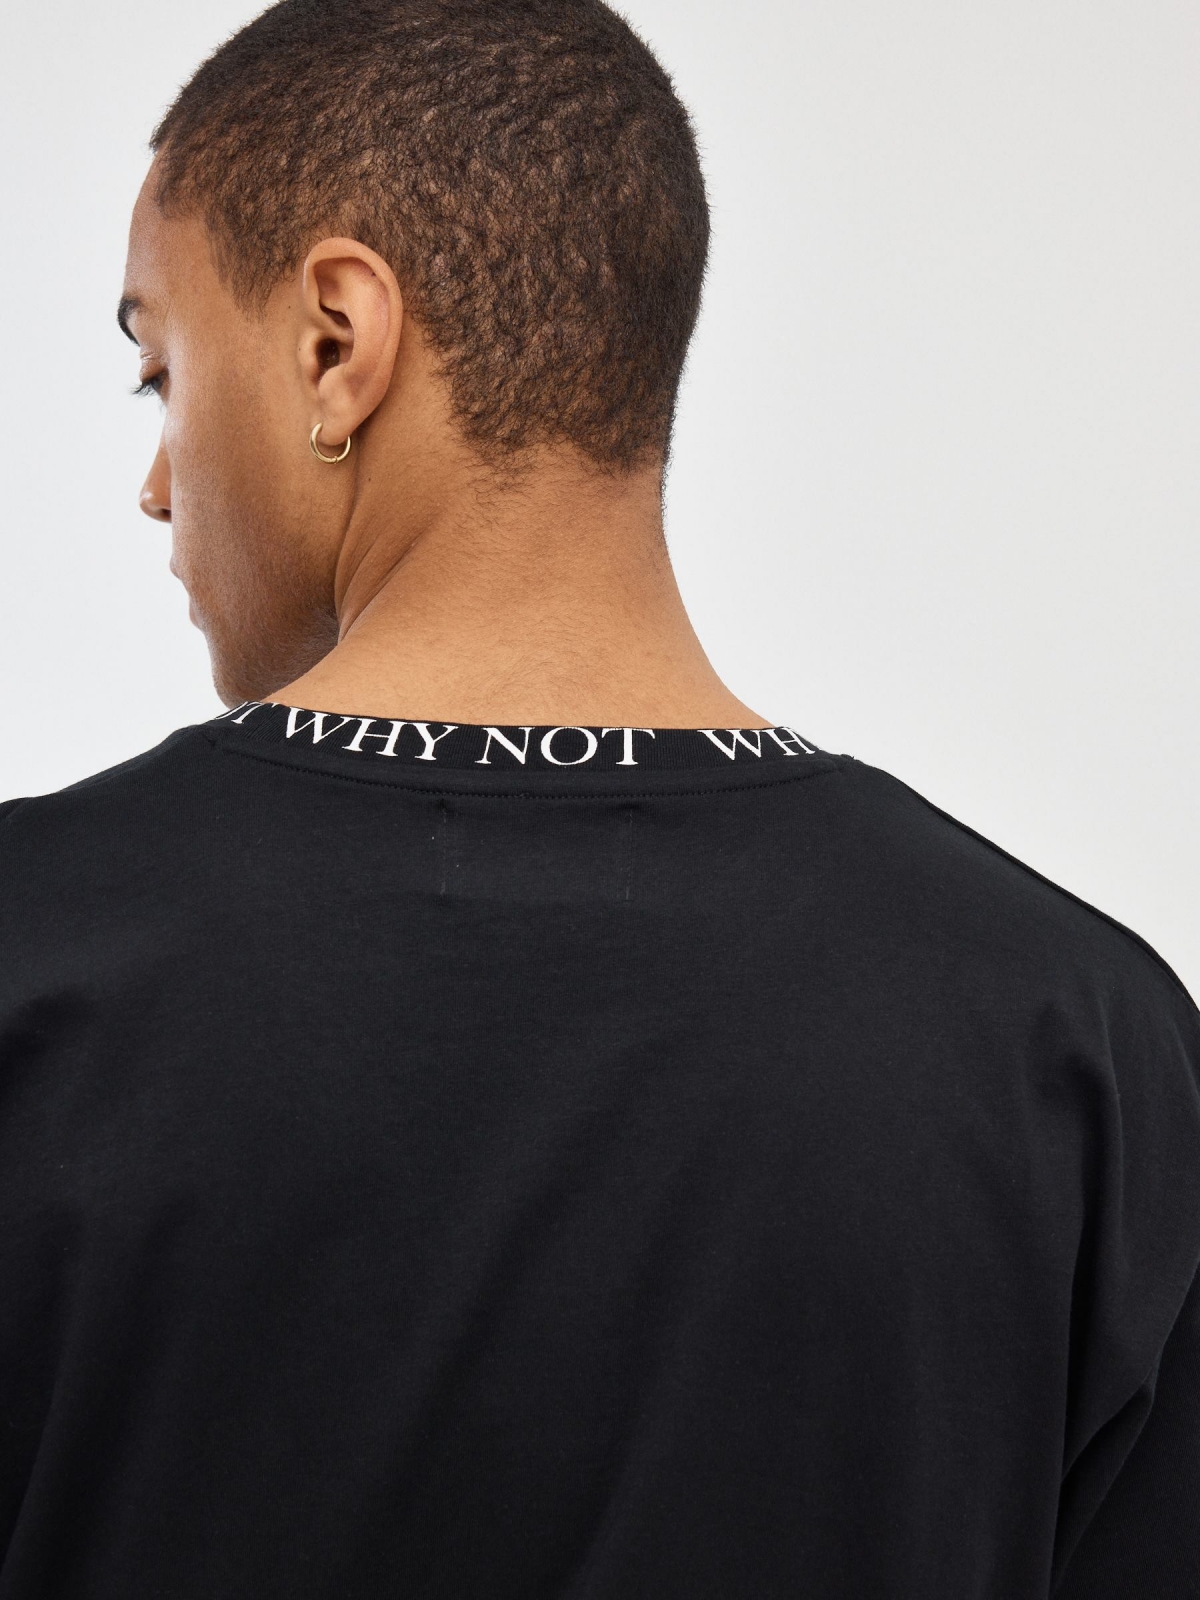 Camiseta Why Not negro vista detalle